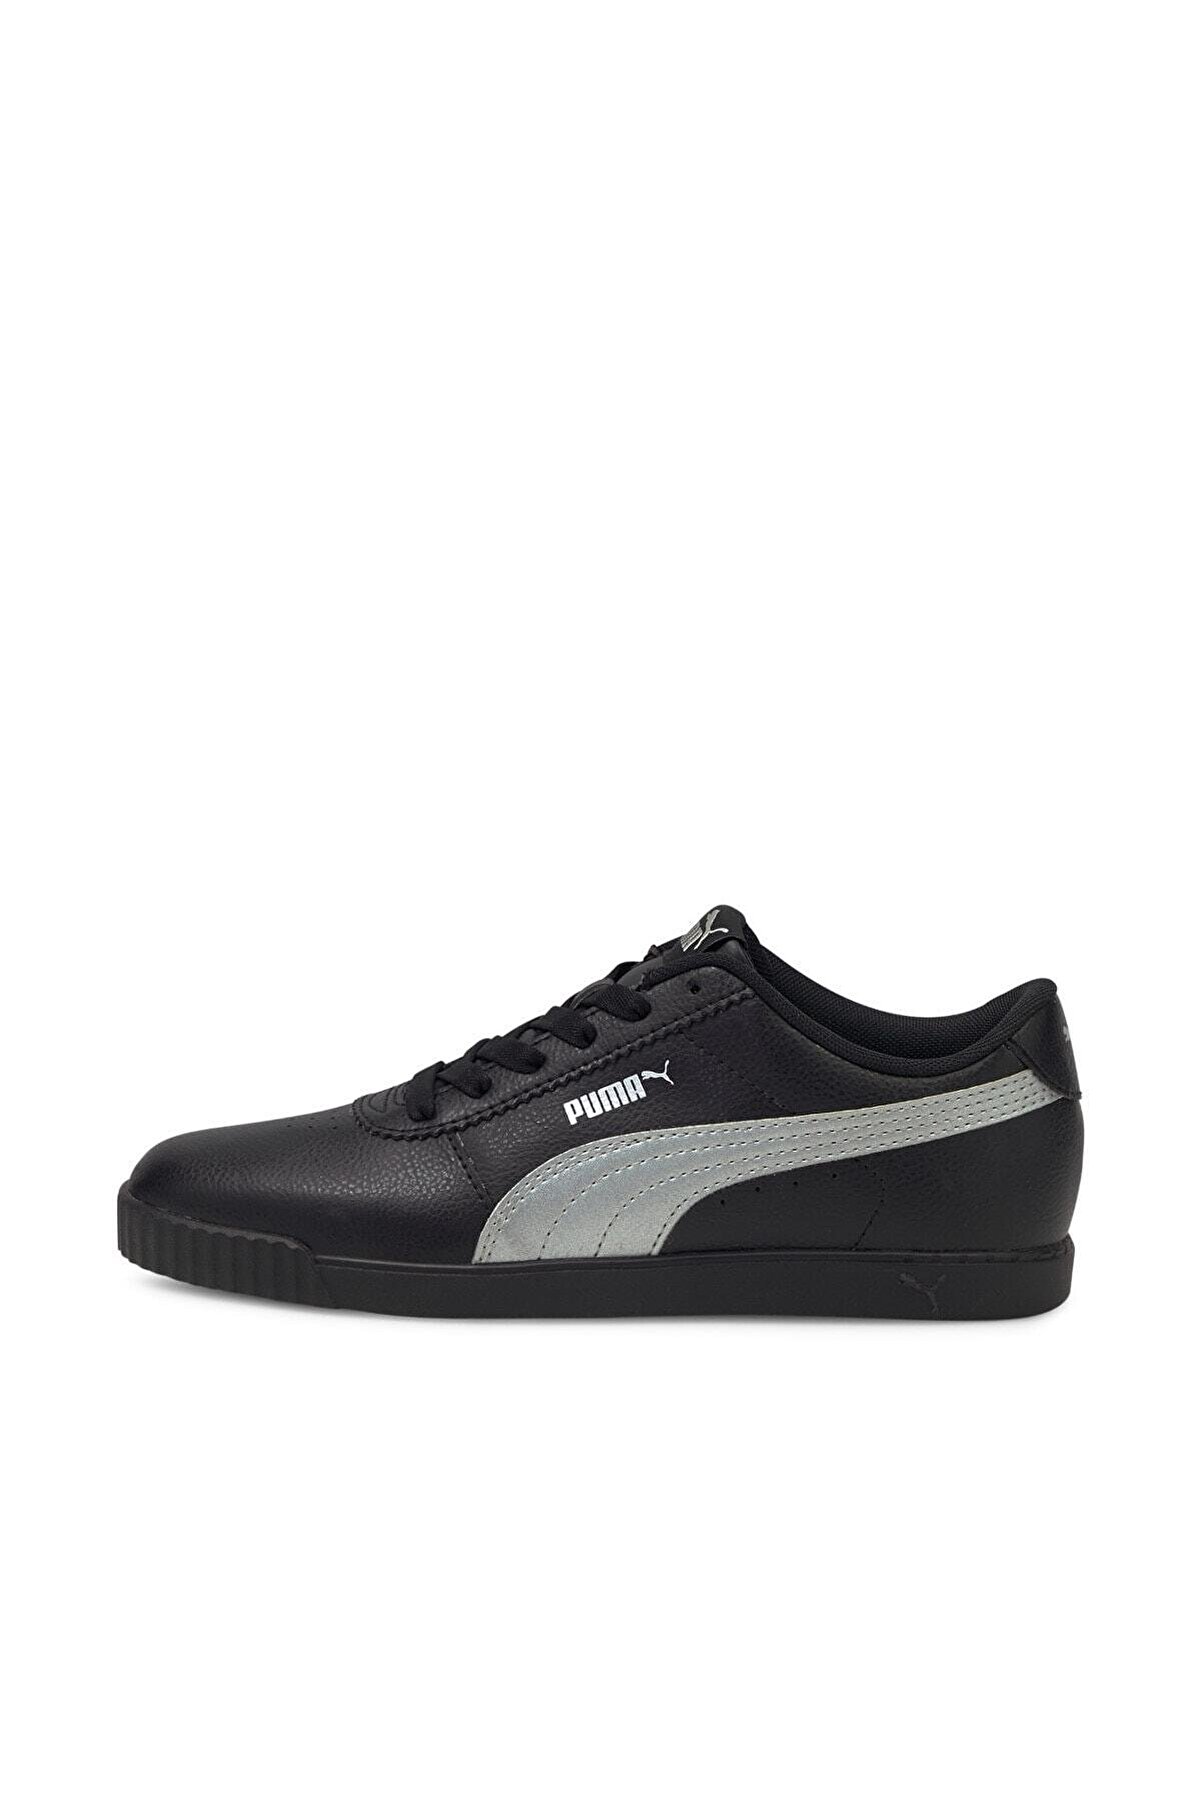 Puma CARINA SLIM SL Siyah Kadın Sneaker Ayakkabı 101085456